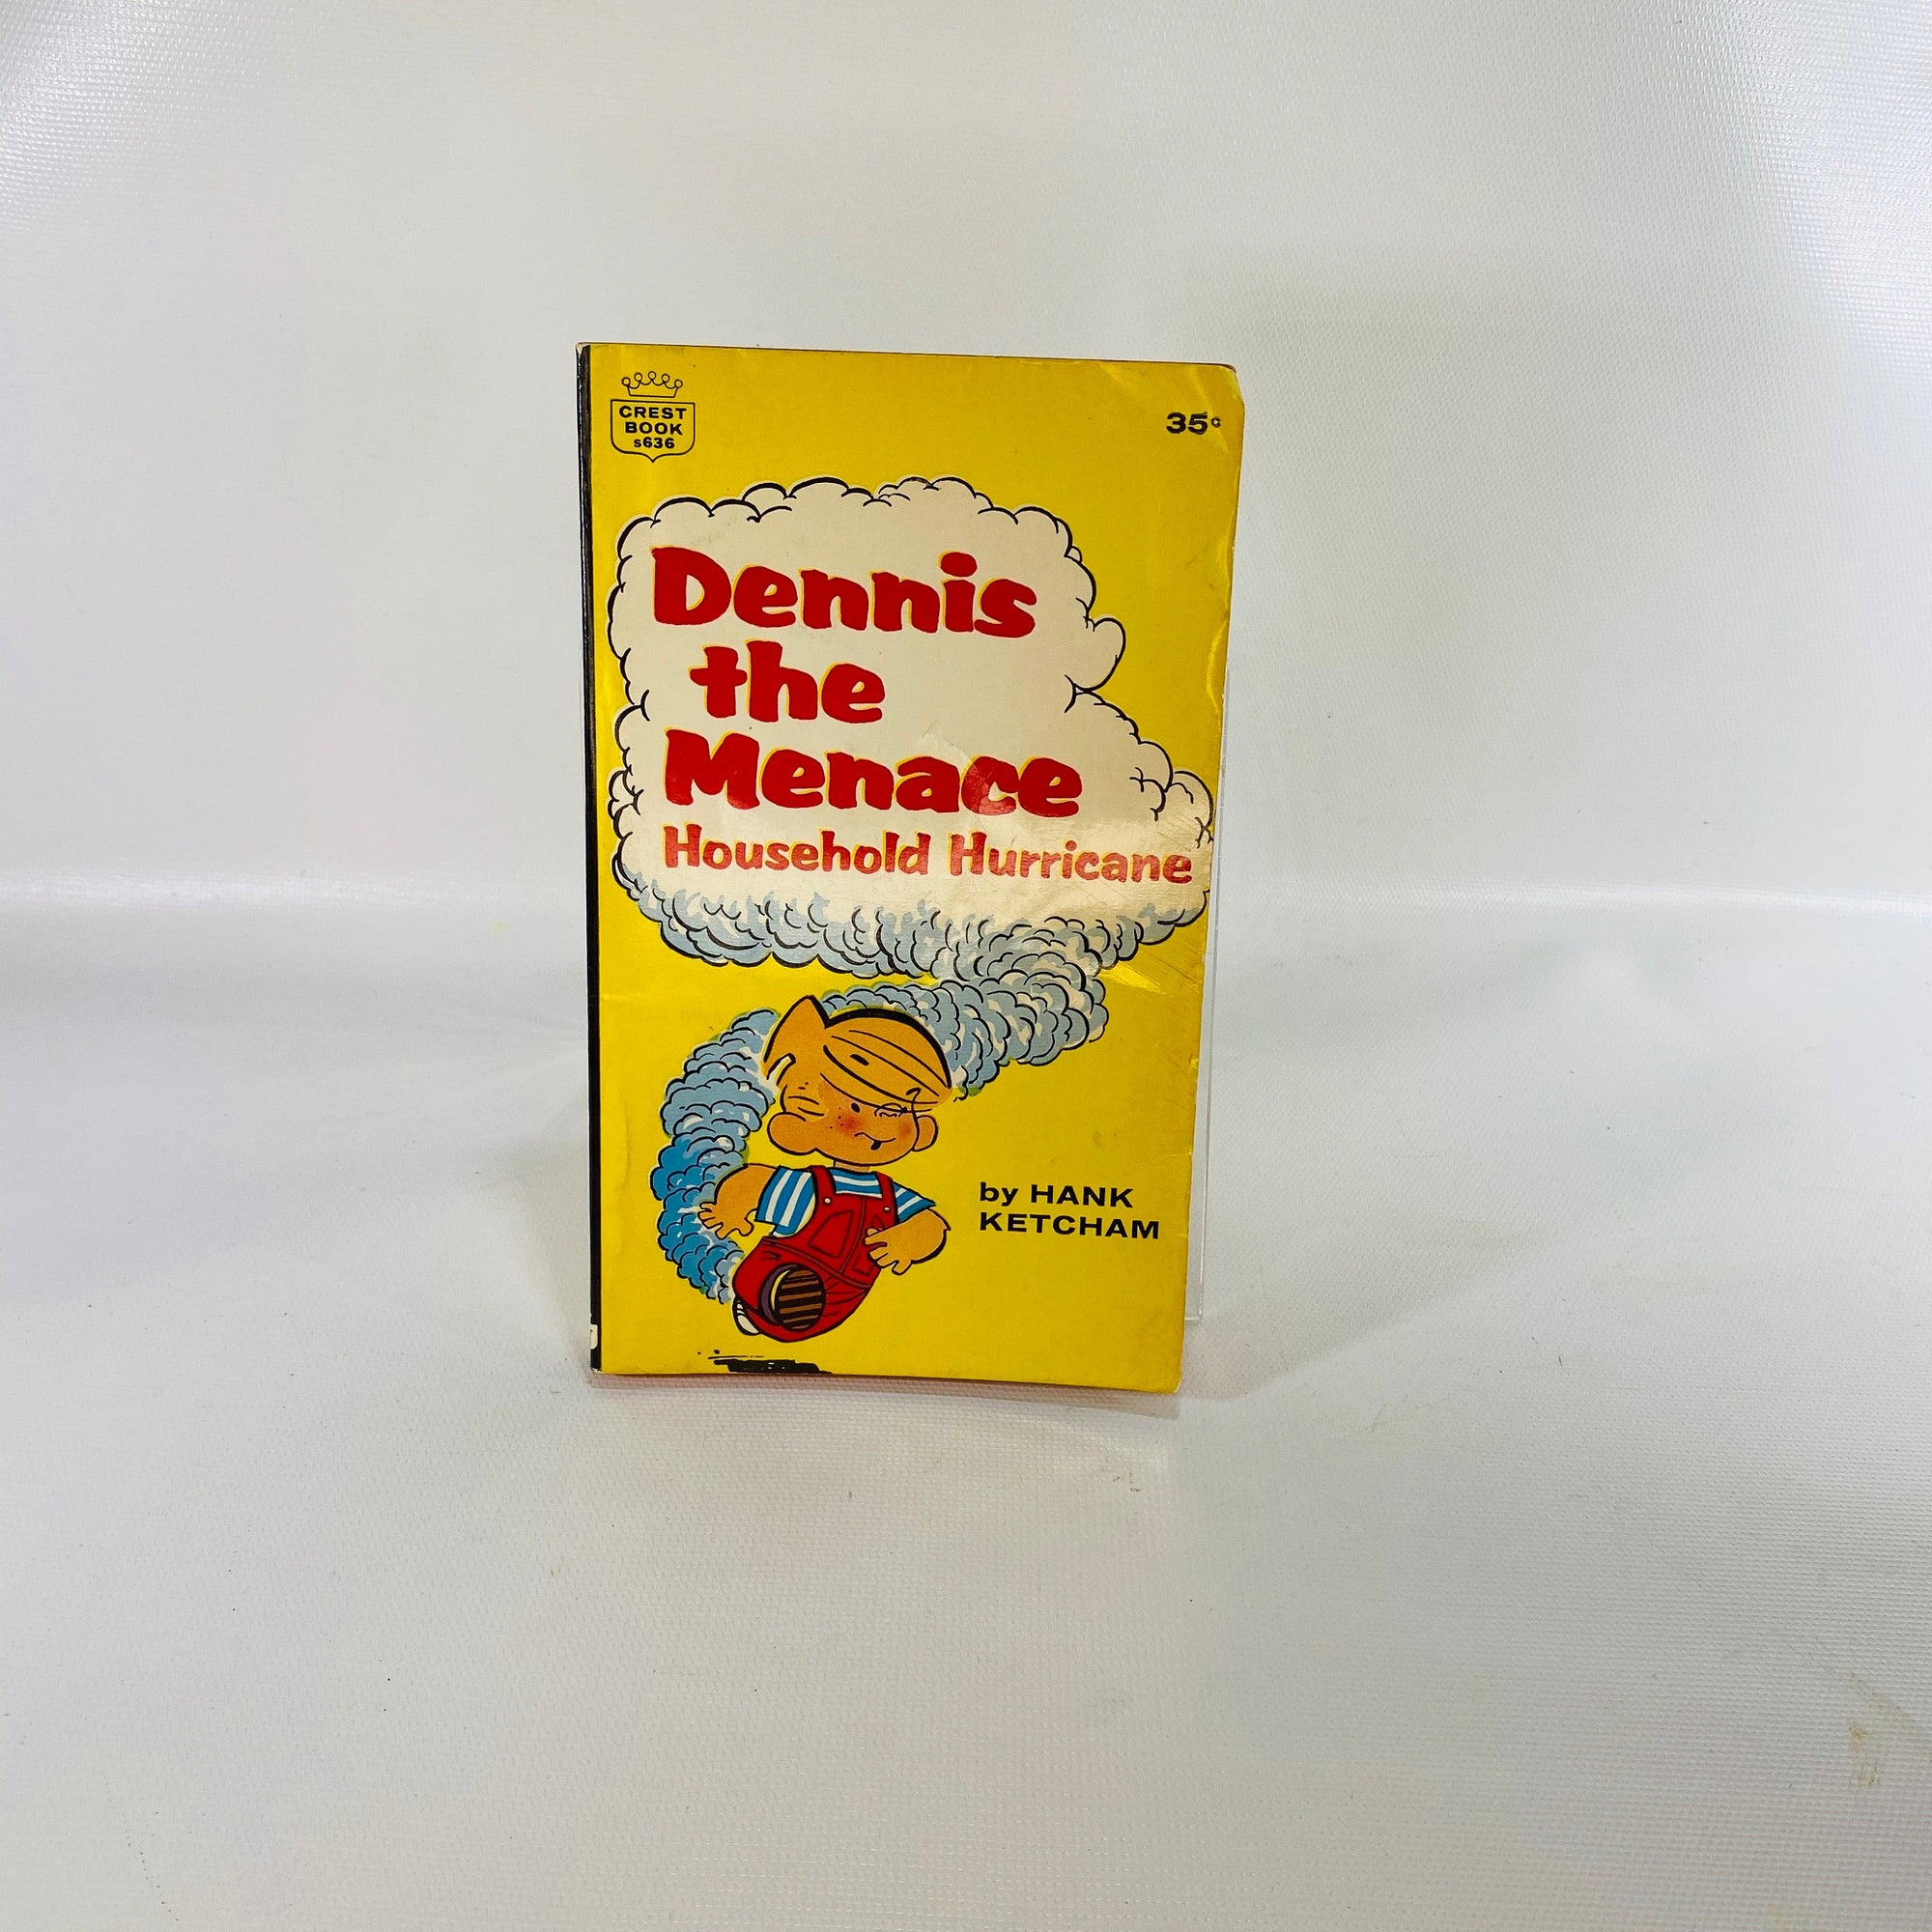 Dennis the Menace Household Hurricane by Hank Ketcham 1963 Vintage Paperback